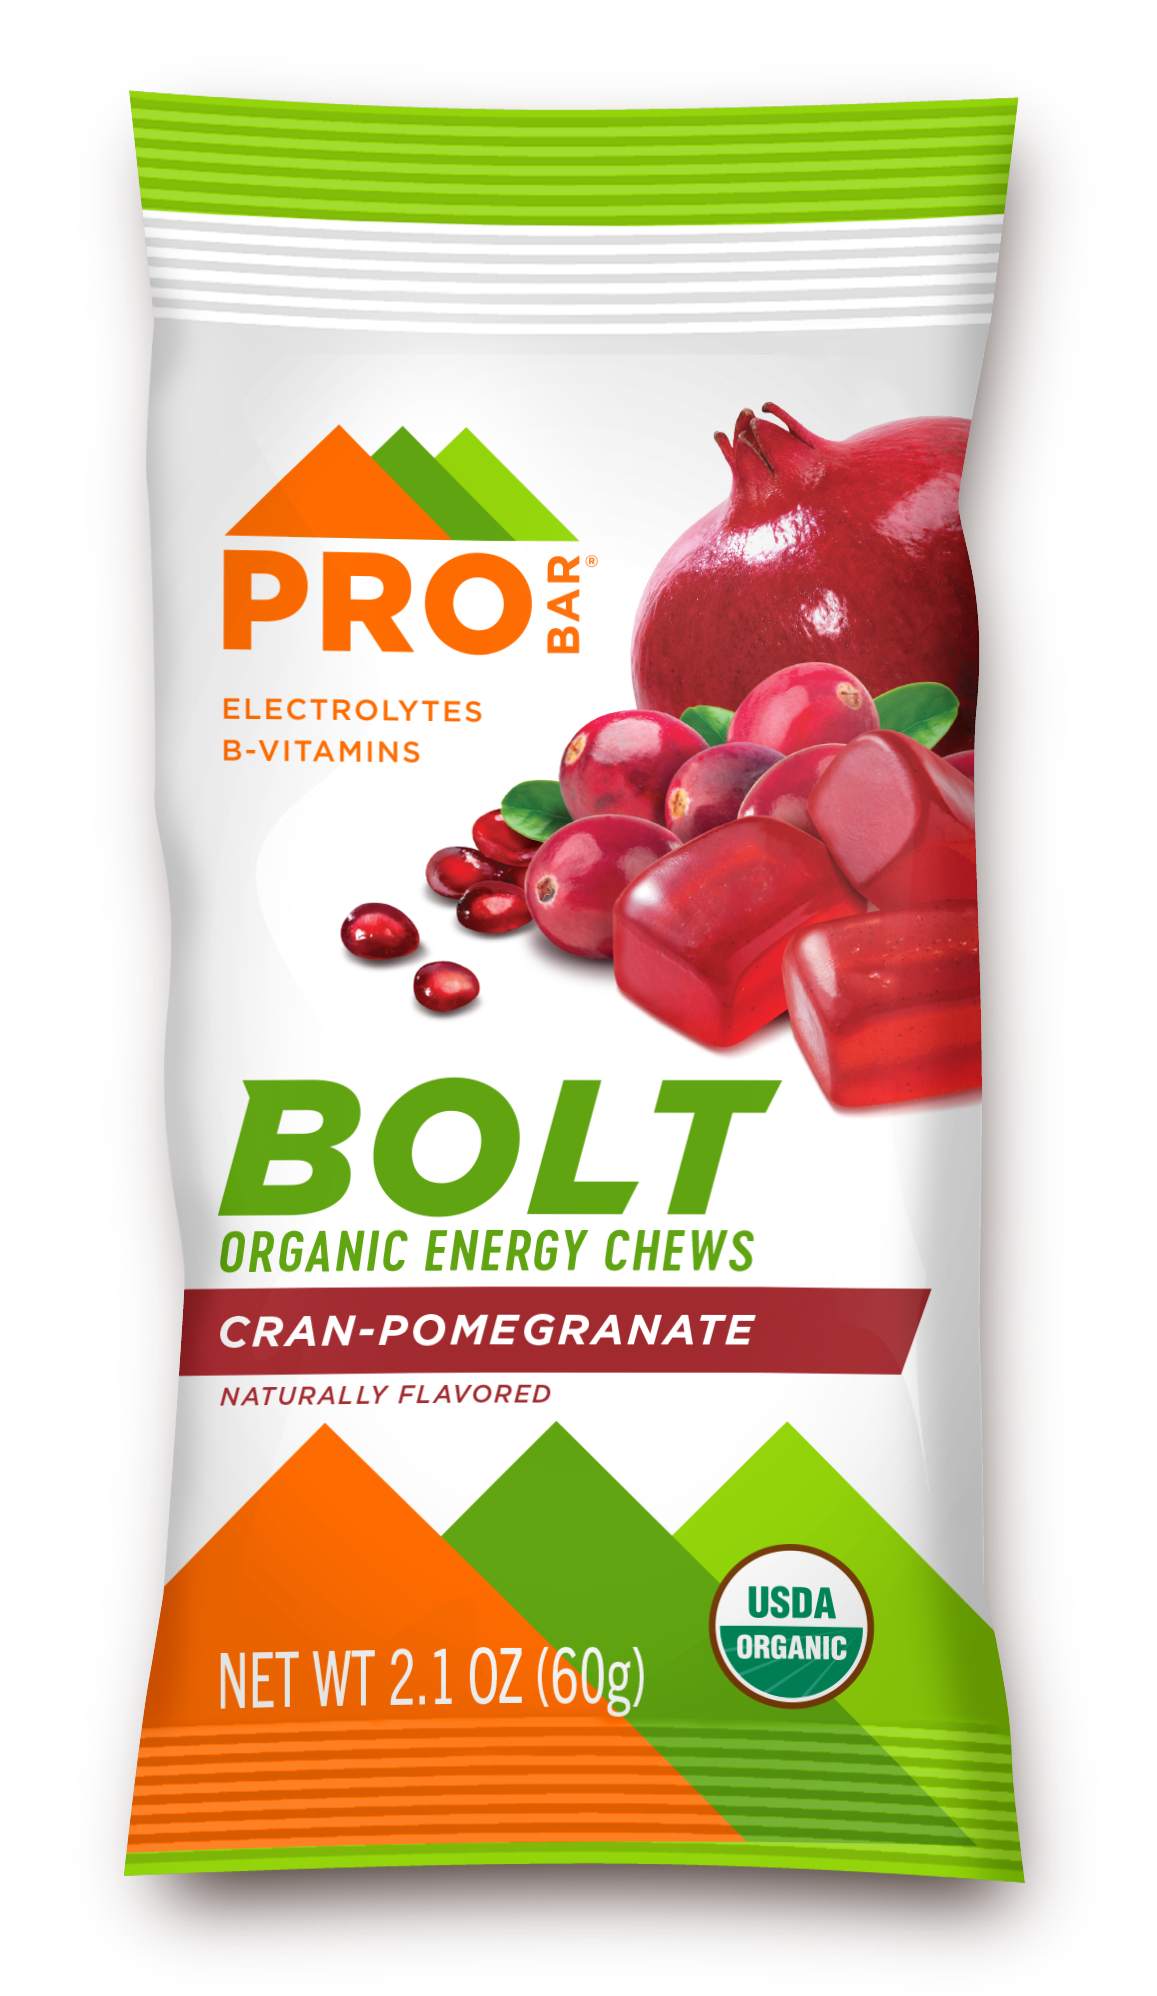 ProBar Cran-Pomegranate Bolt Organic Energy Chews 12 innerpacks per case 2.1 oz